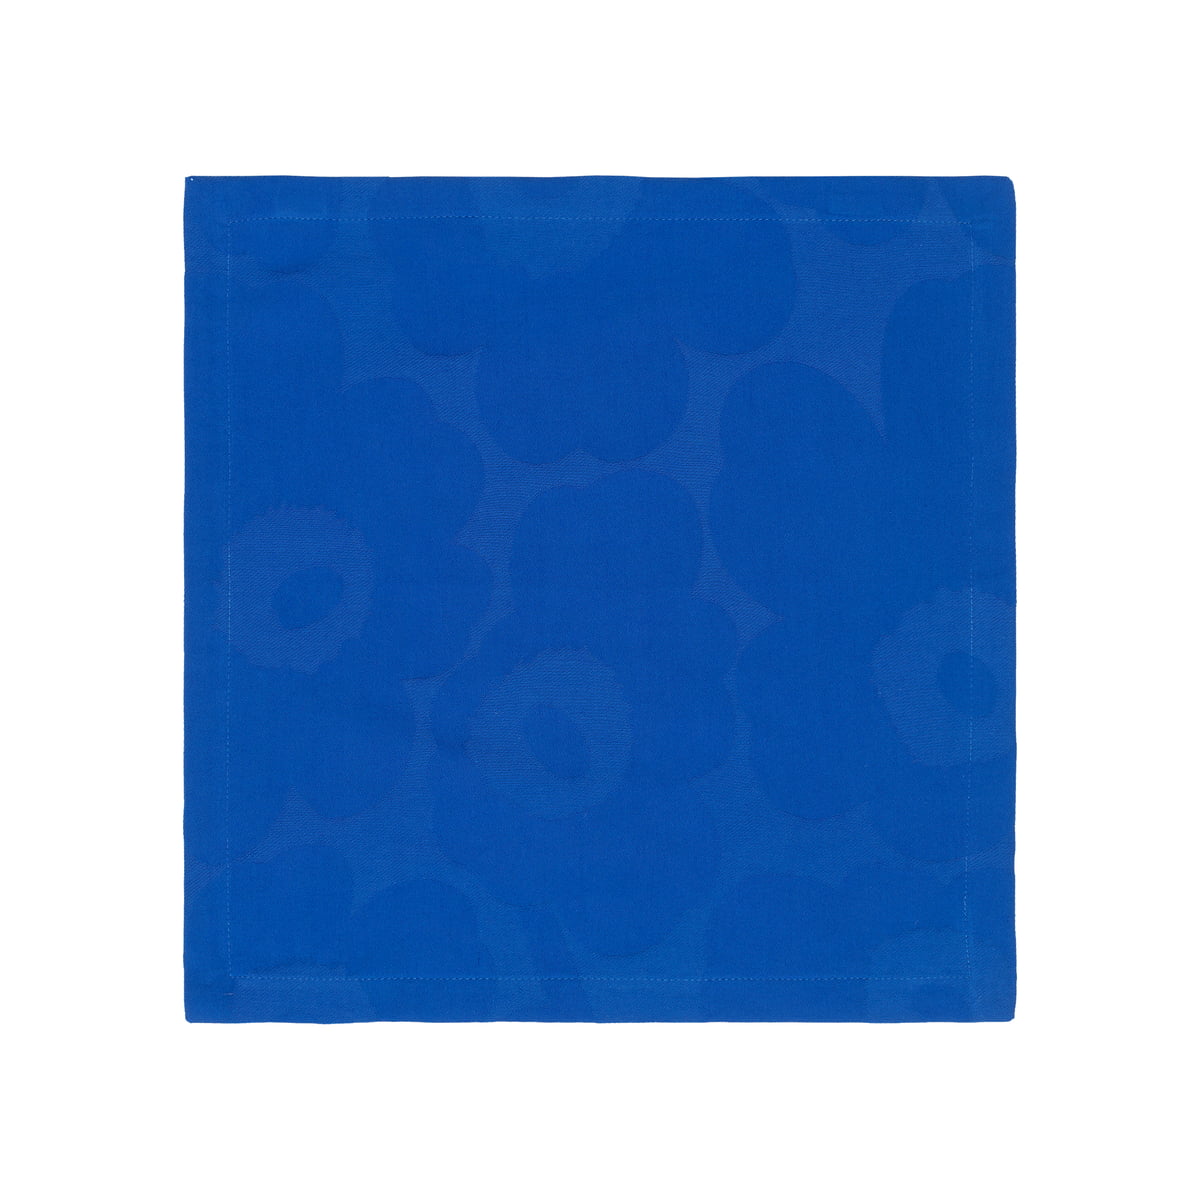 marimekko - unikko serviette de table, 40 x 40 cm, bleu foncé / bleu